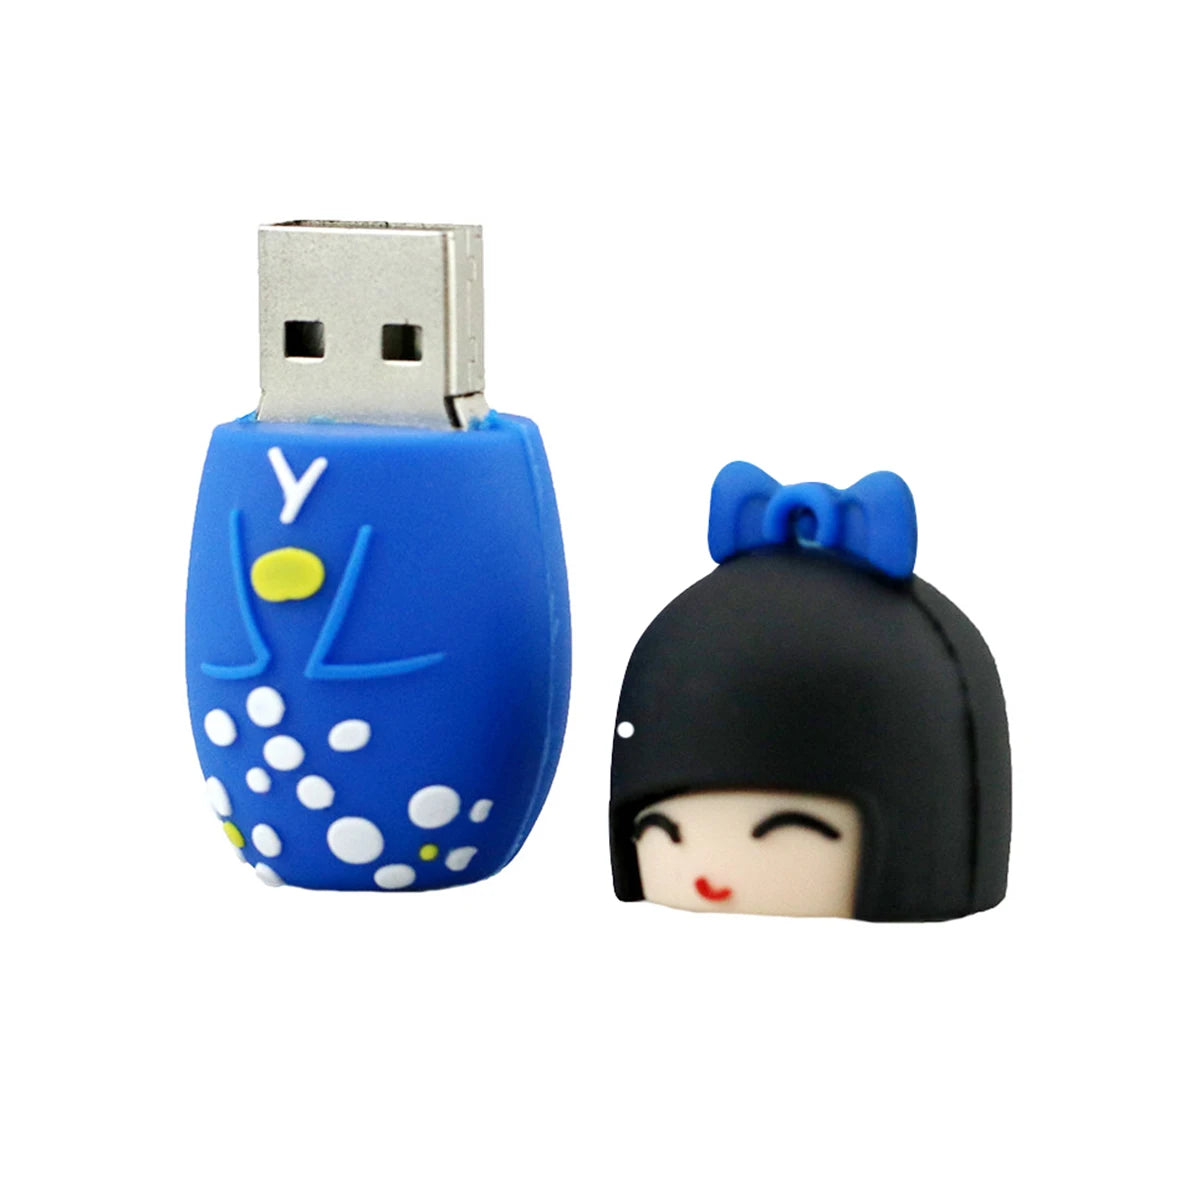 1PC Kawaii Japanese Dolls Kimono Girl USB Memory Stick